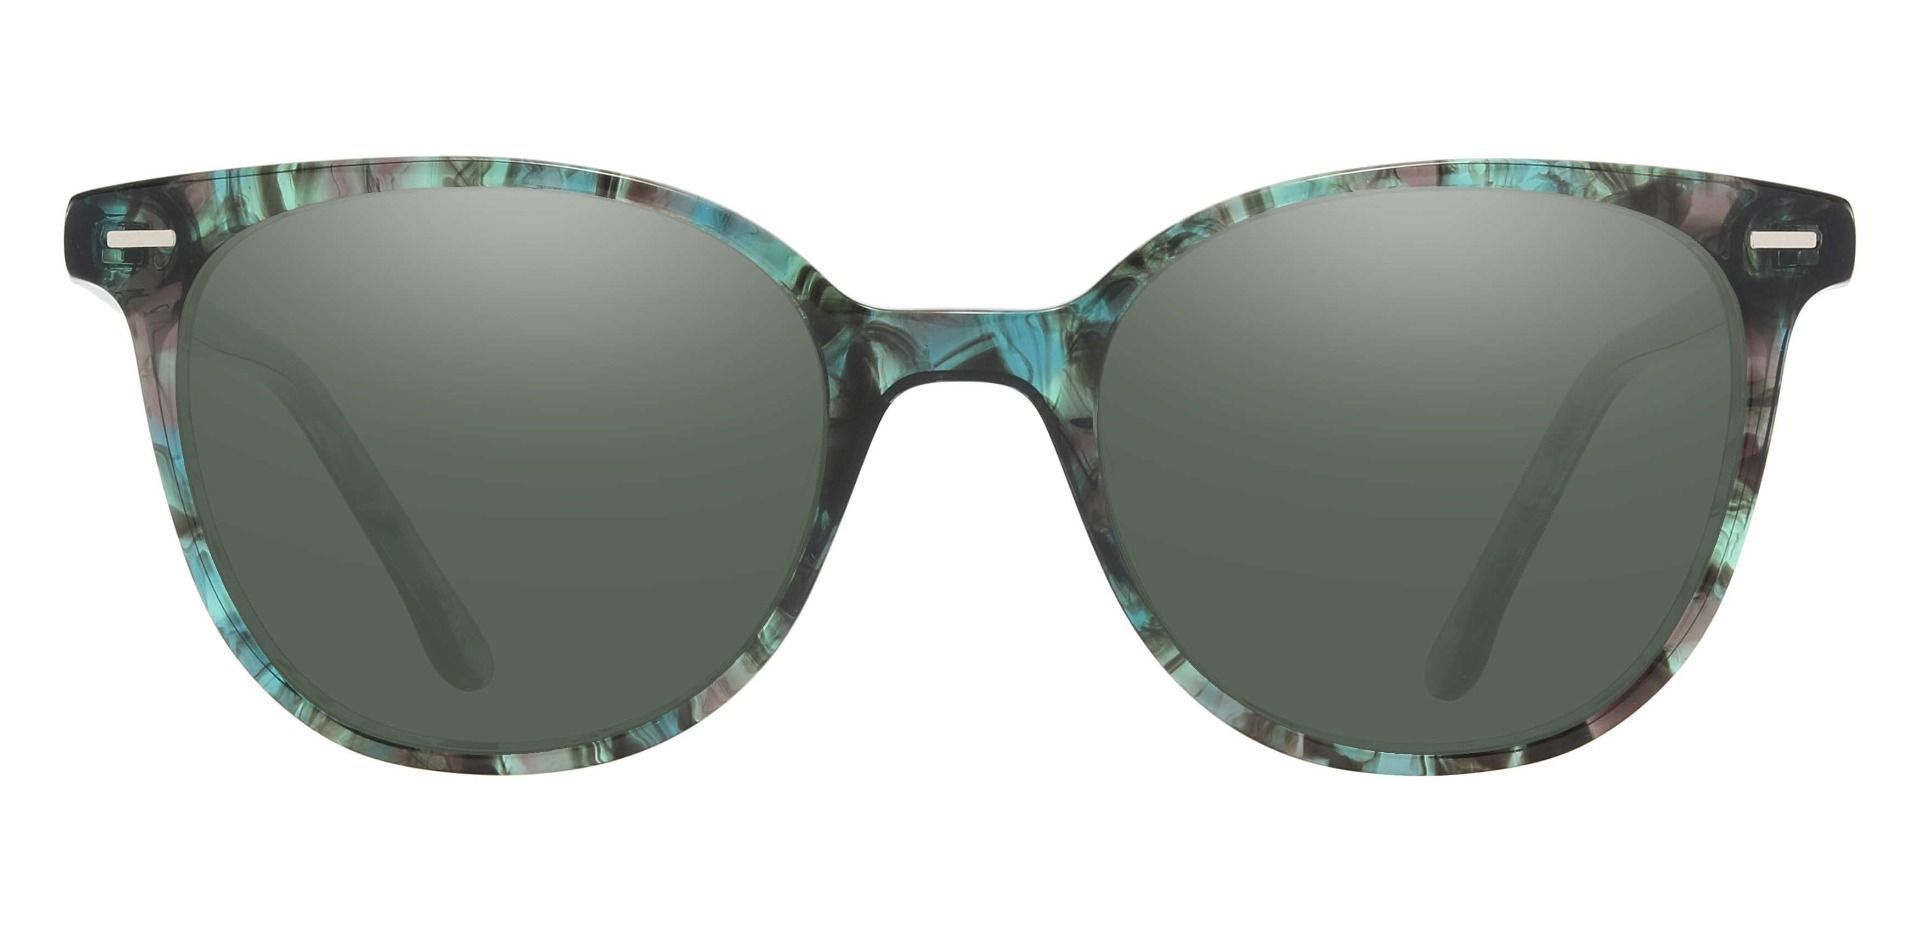 Chili Oval Progressive Sunglasses - Green Frame With Green Lenses